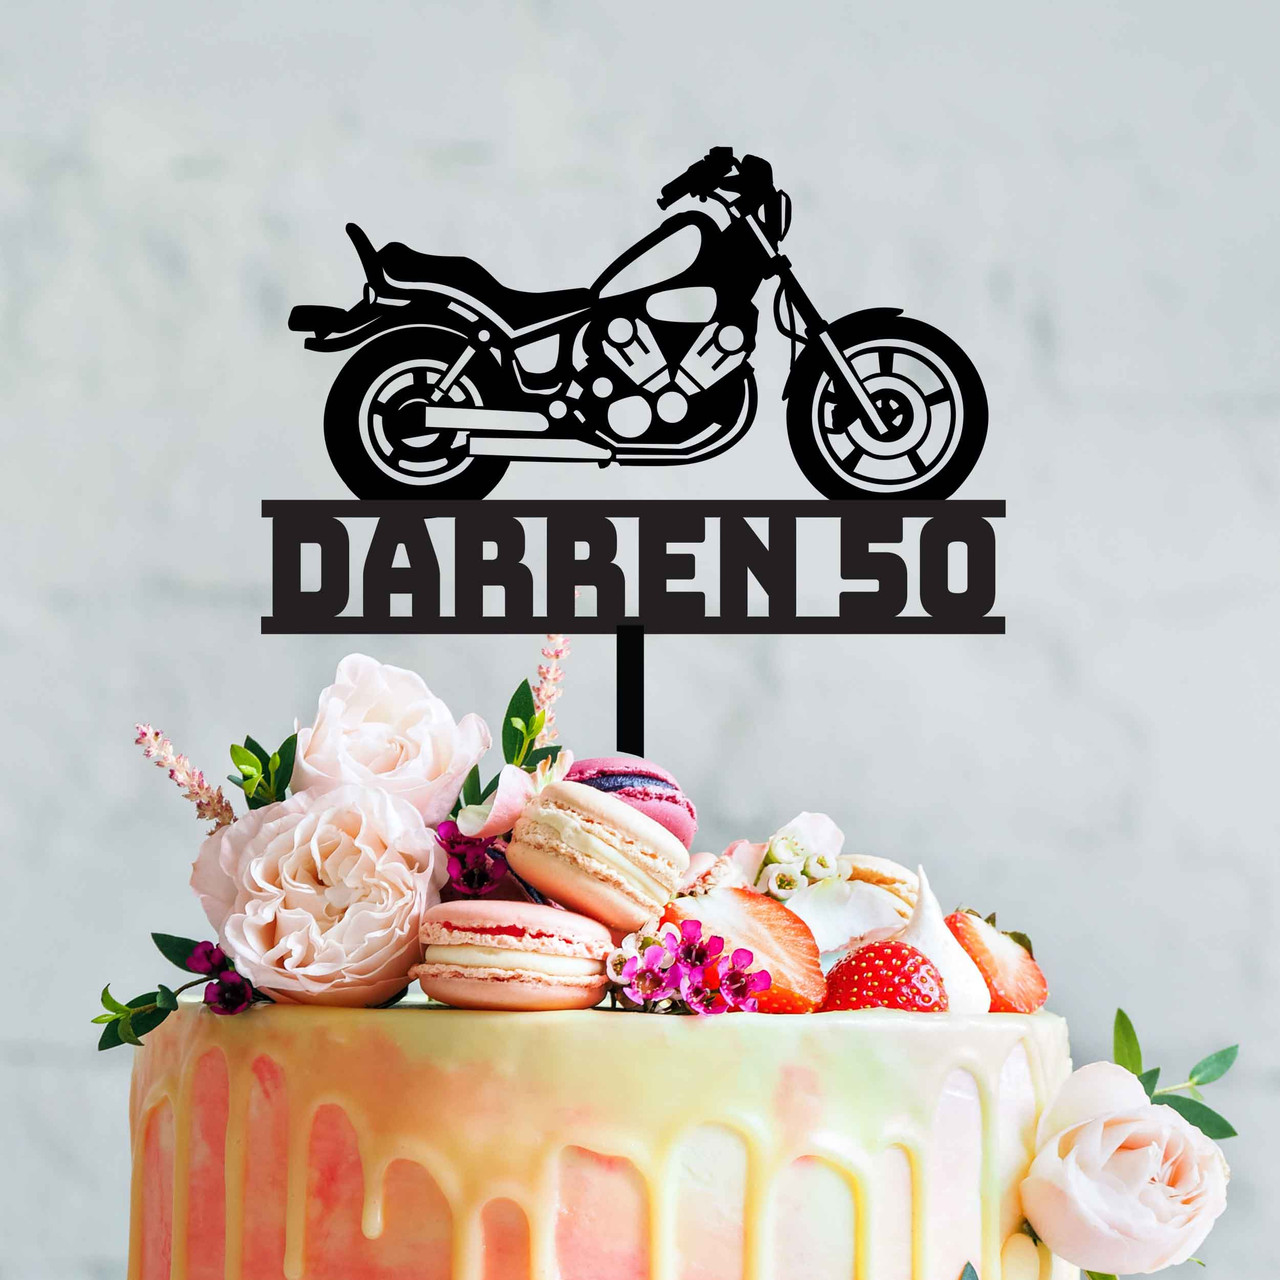 Le cupcake quotidien: motorbike cake